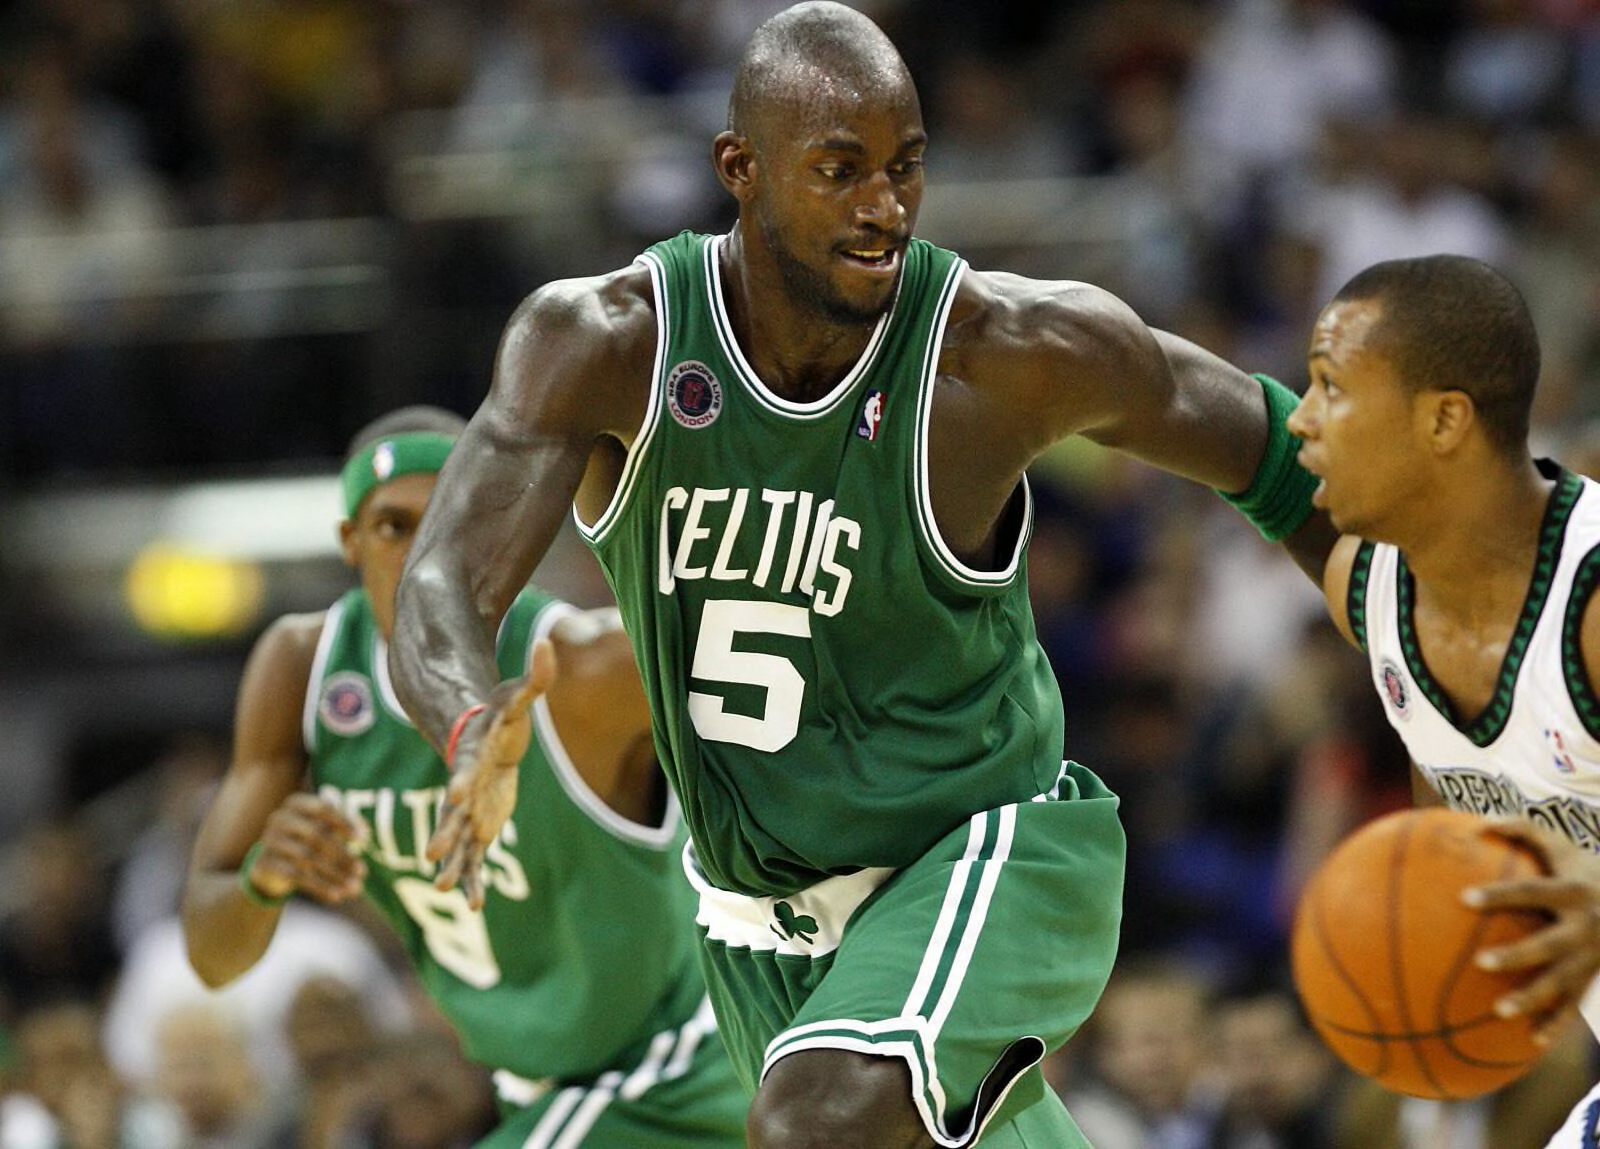 Report: Kevin Garnett likely retiring - CelticsBlog